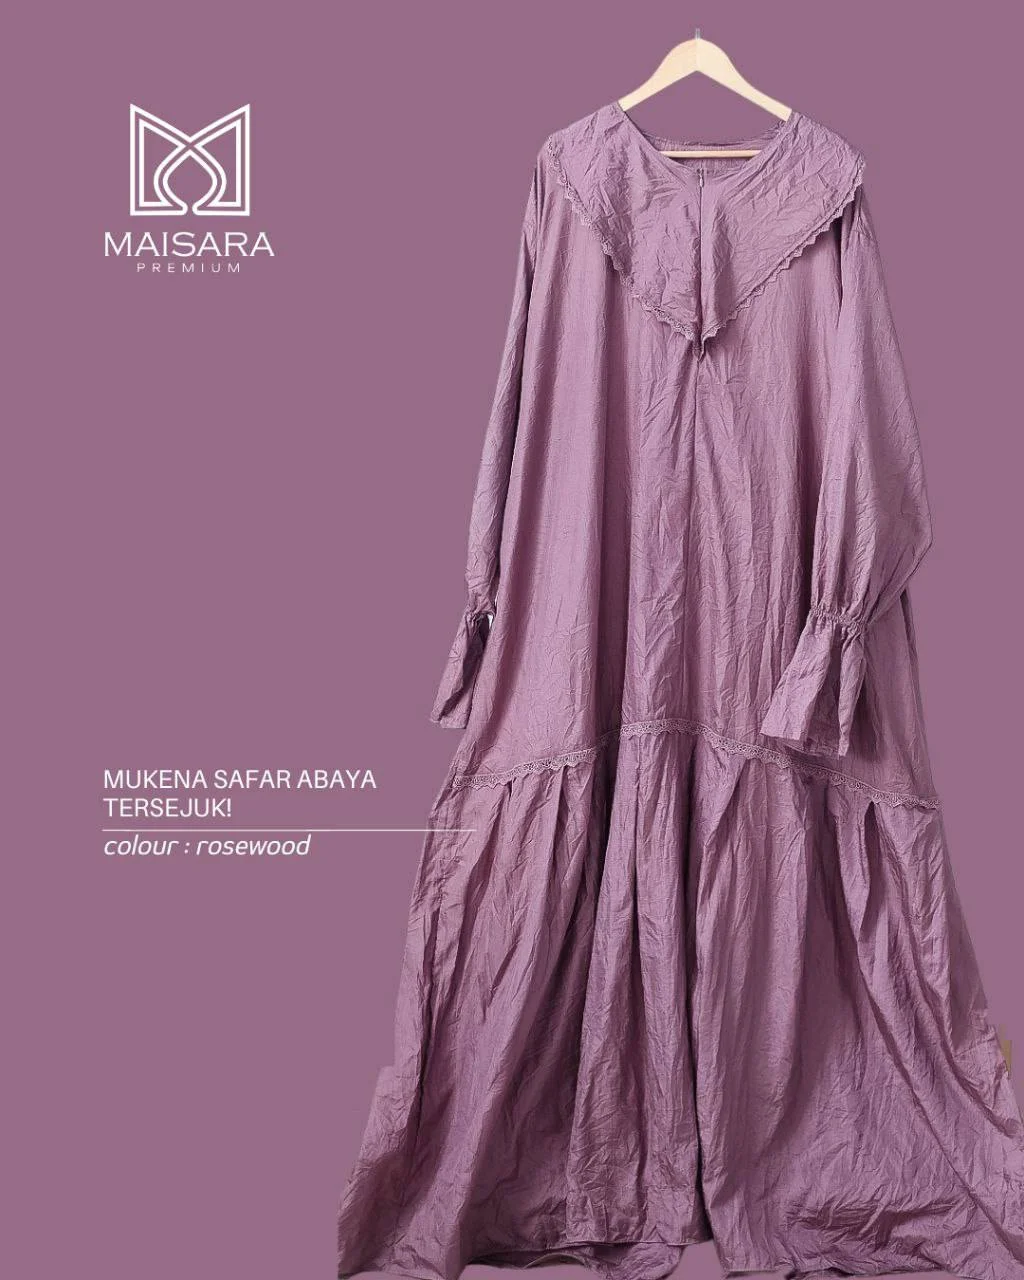 mukena safar abaya warna rosewood - geraimaisarapremium